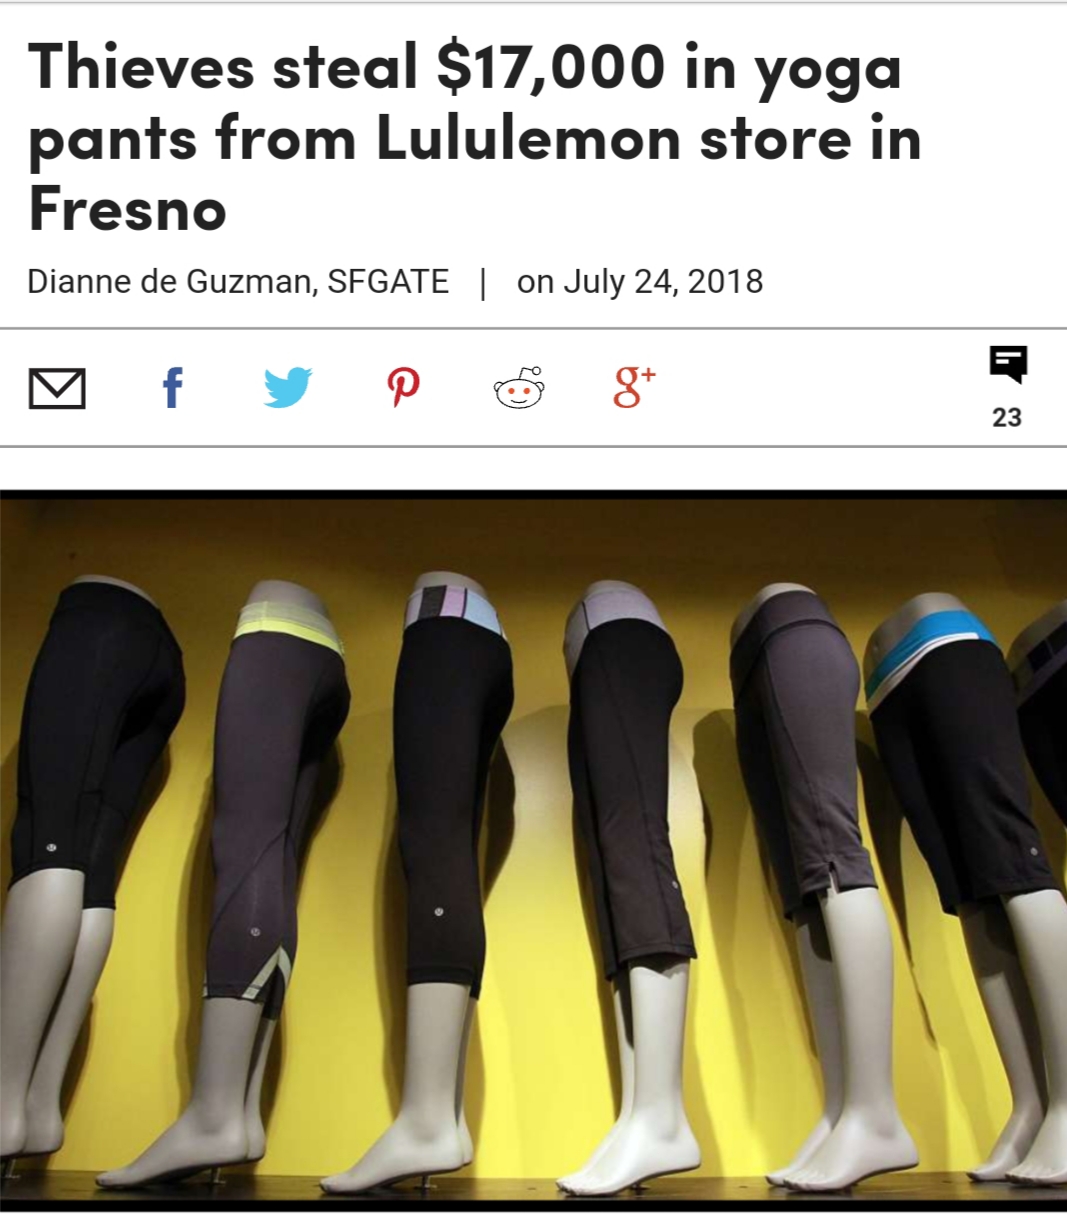 leggings in school - Thieves steal $17,000 in yoga pants from Lululemon store in Fresno Dianne de Guzman, Sfgate on